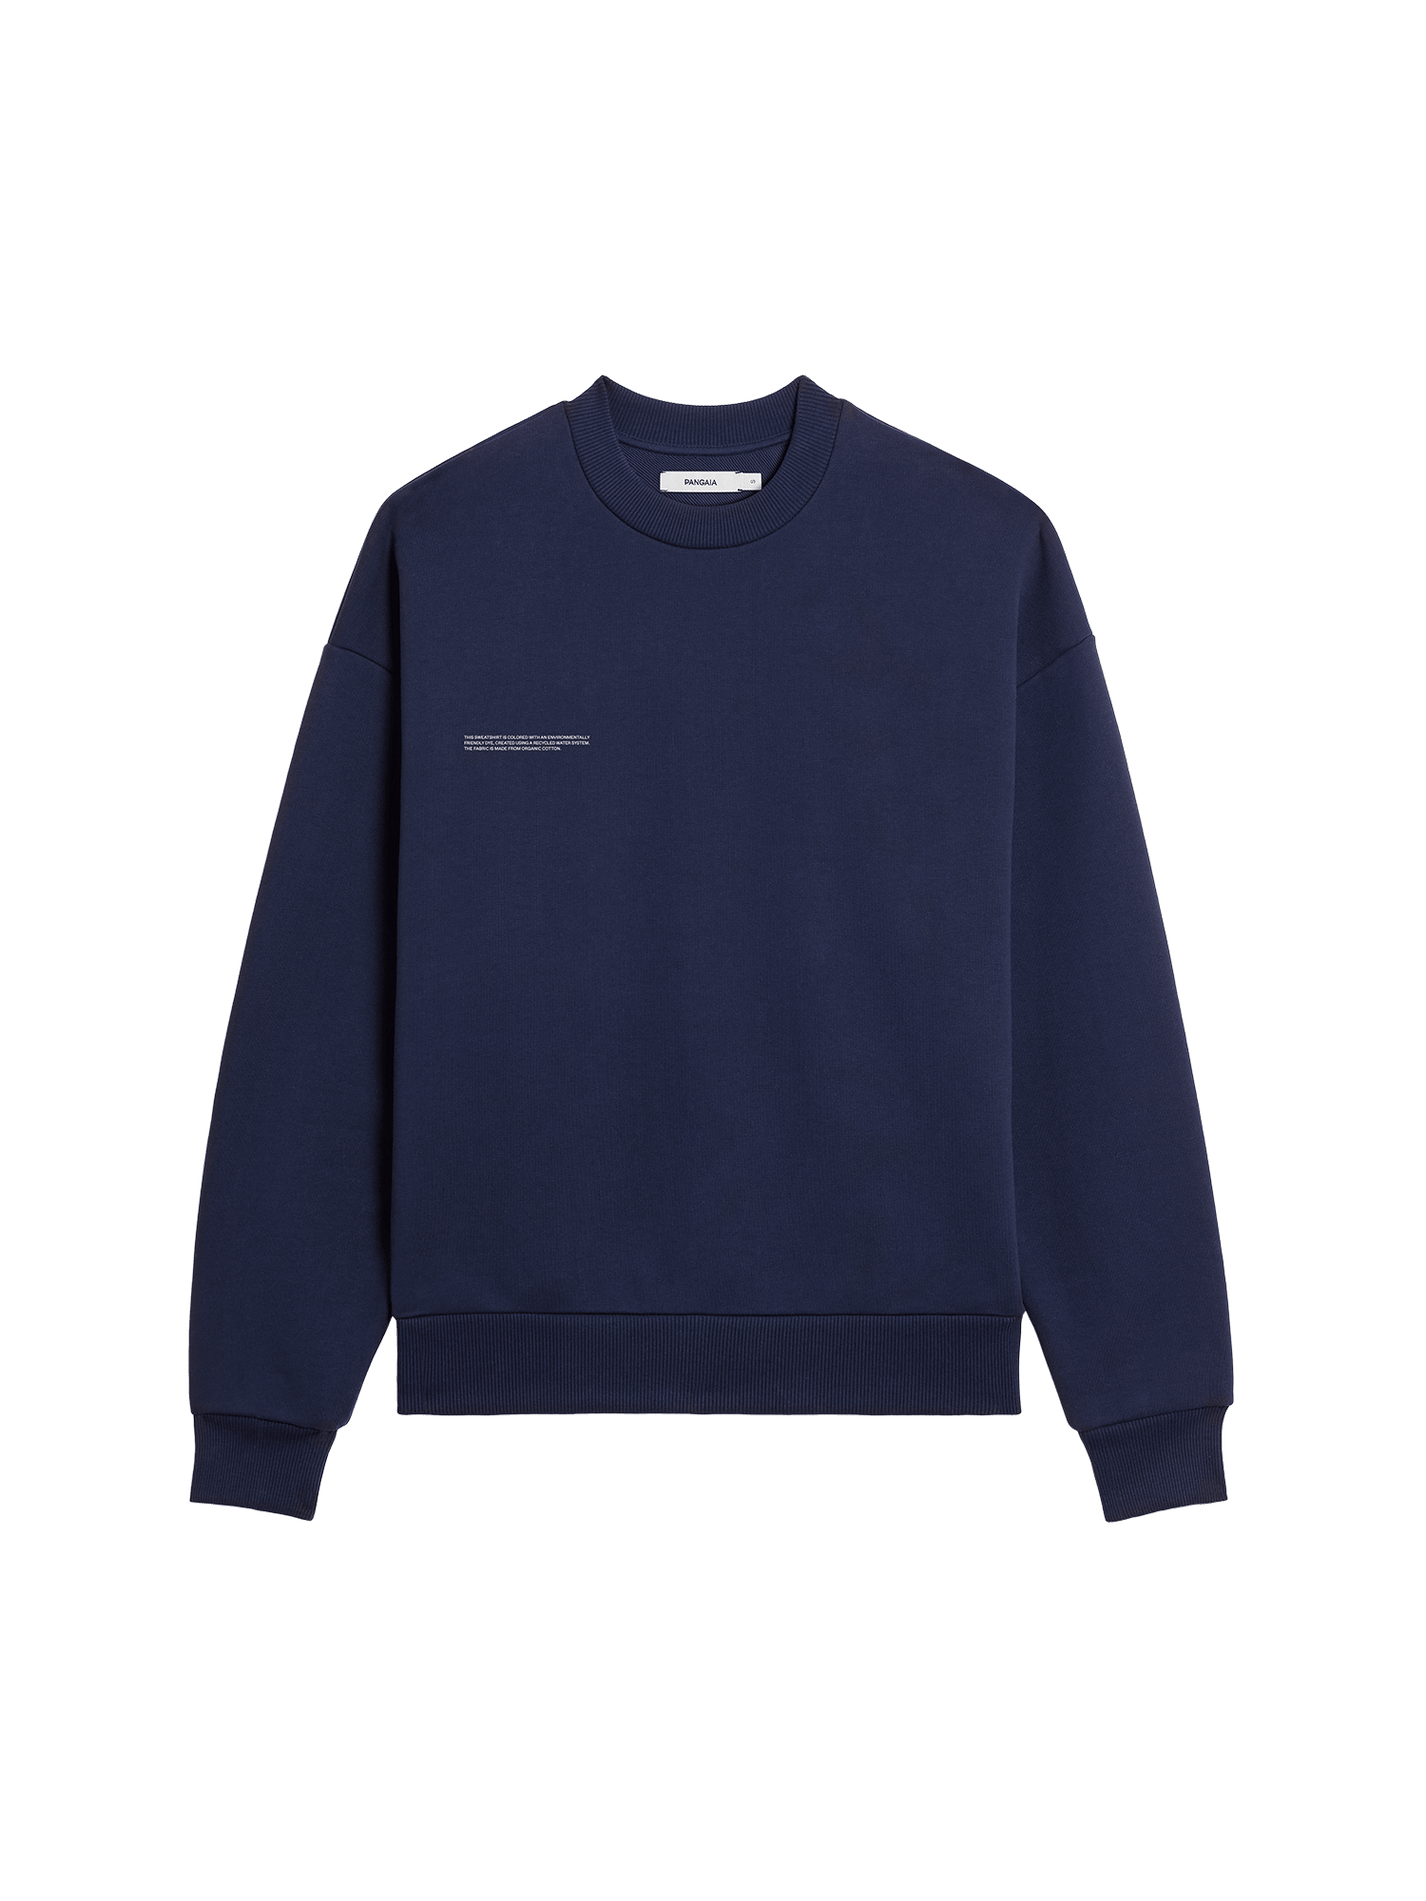 365 Midweight Sweatshirt - Navy Blue - Pangaia